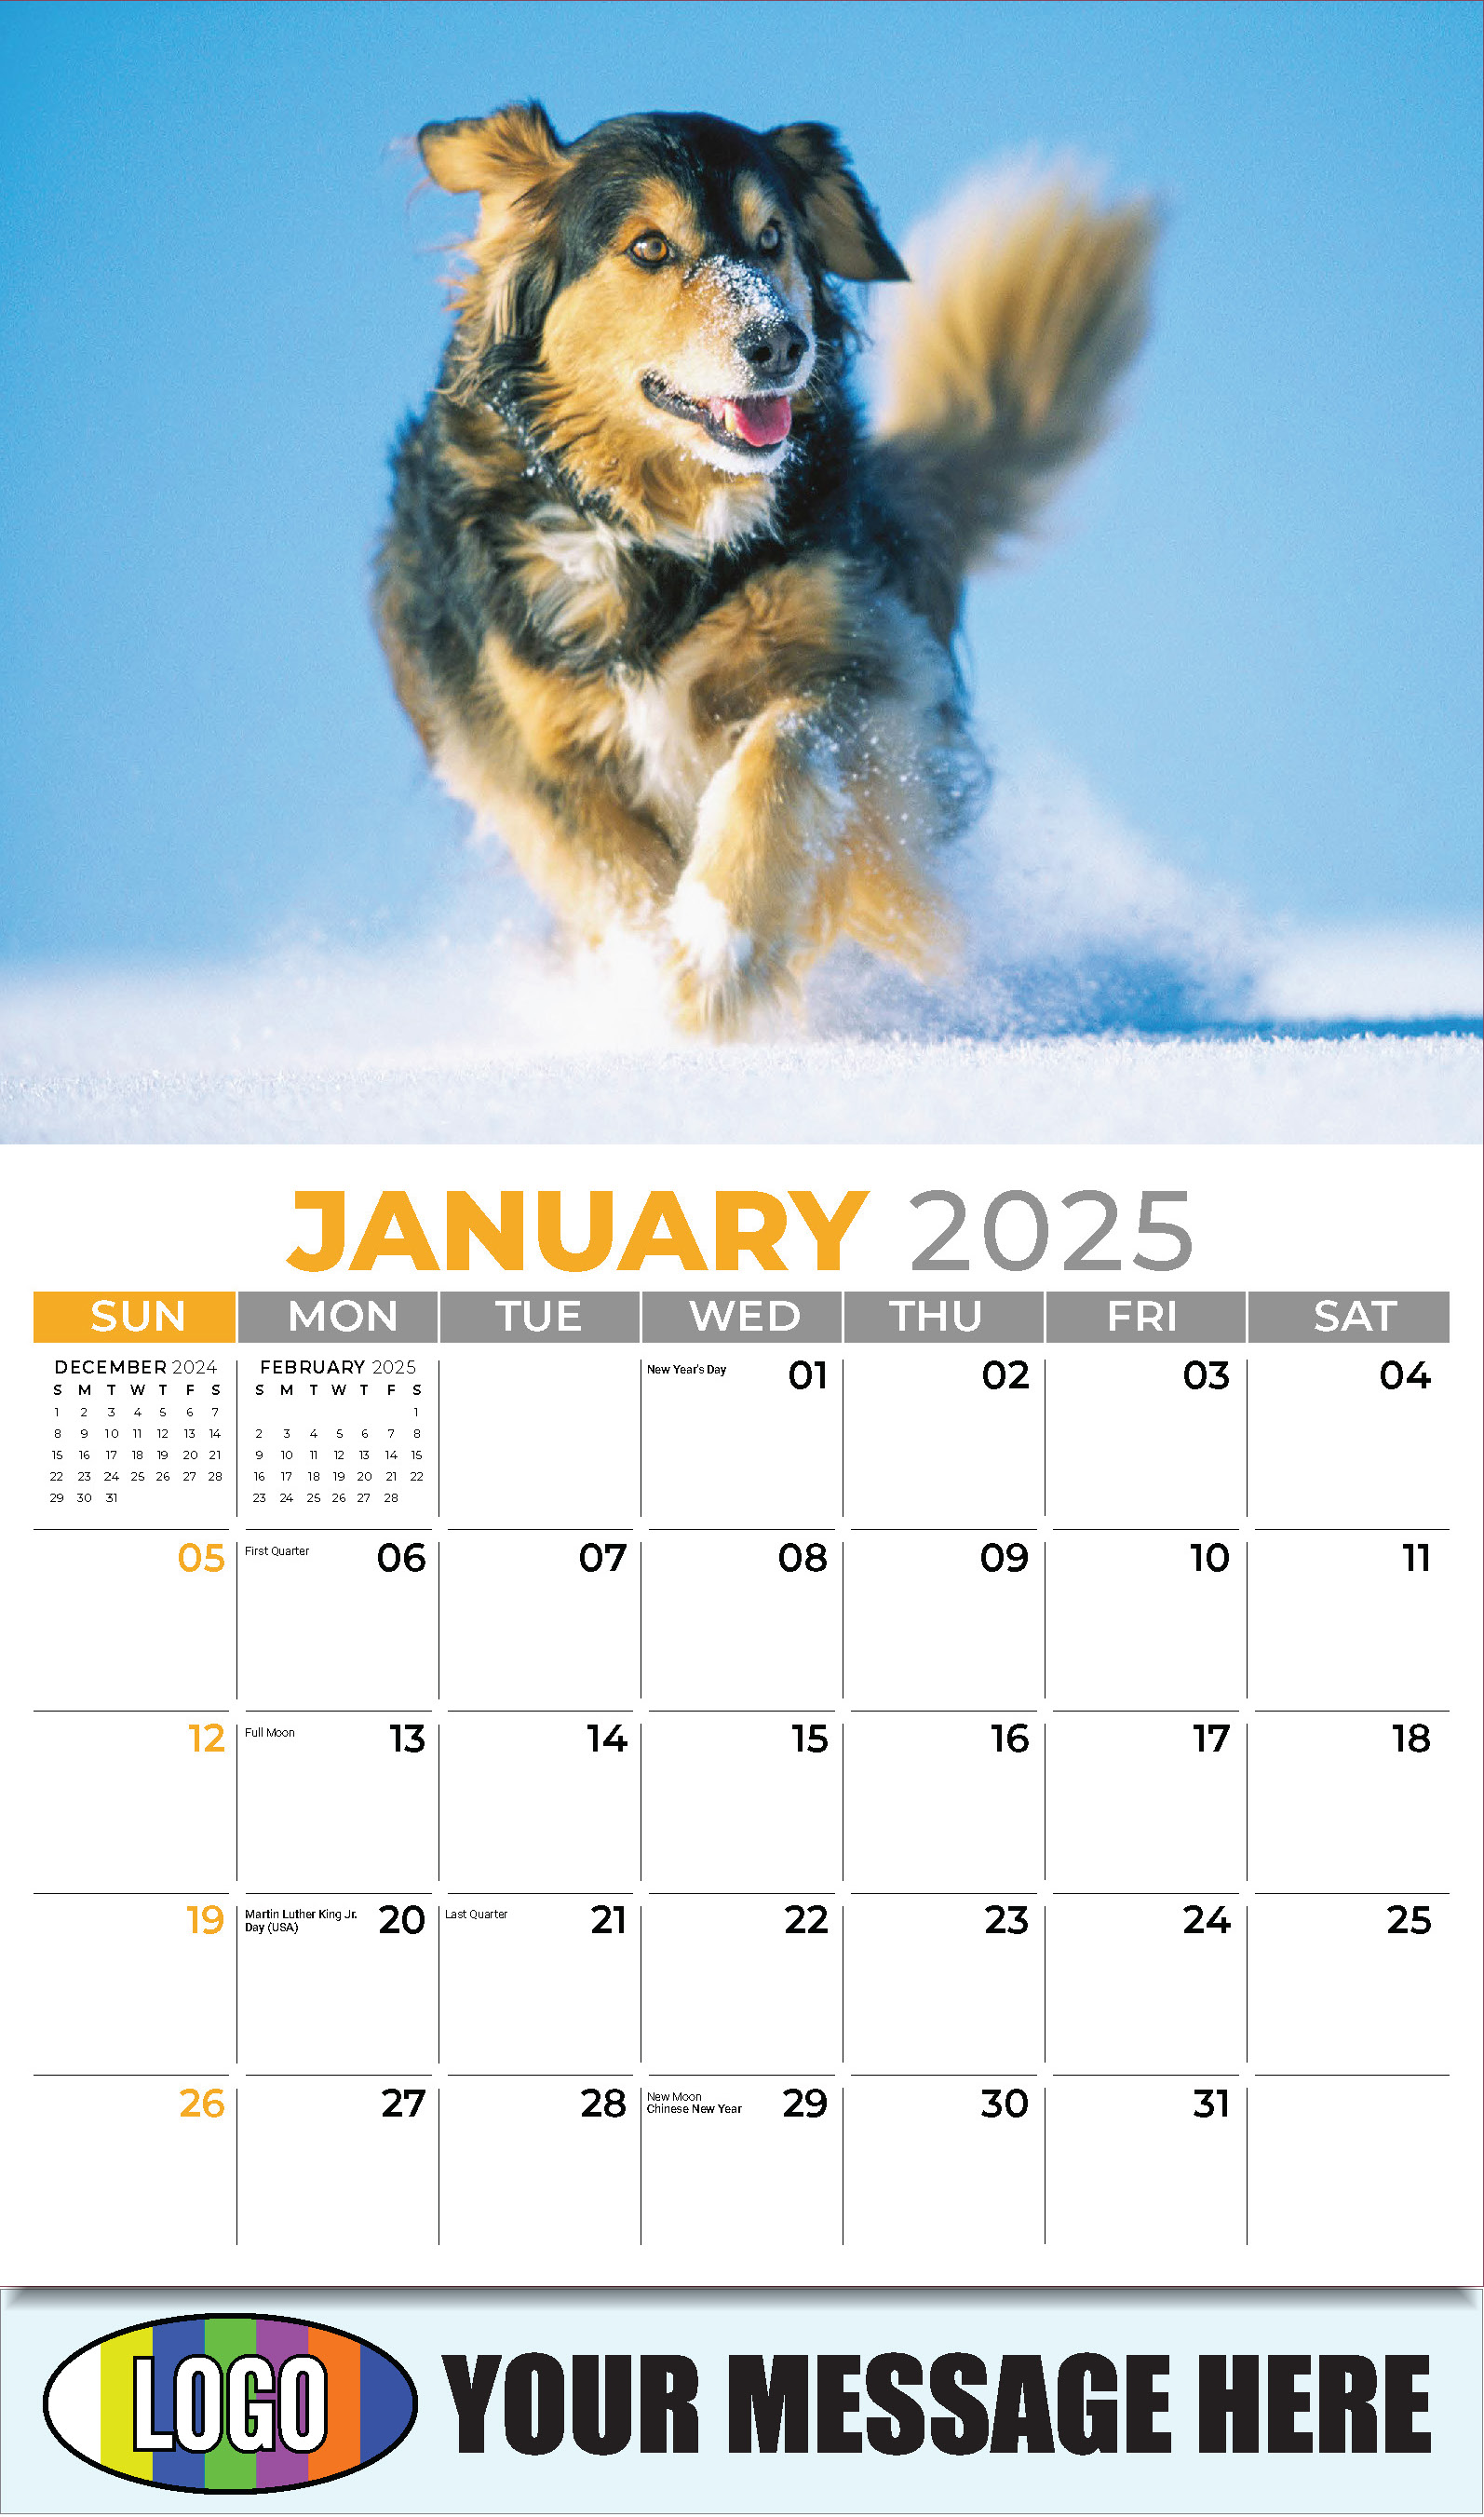 Pets 2025 Business Advertising Wall Calendar - January